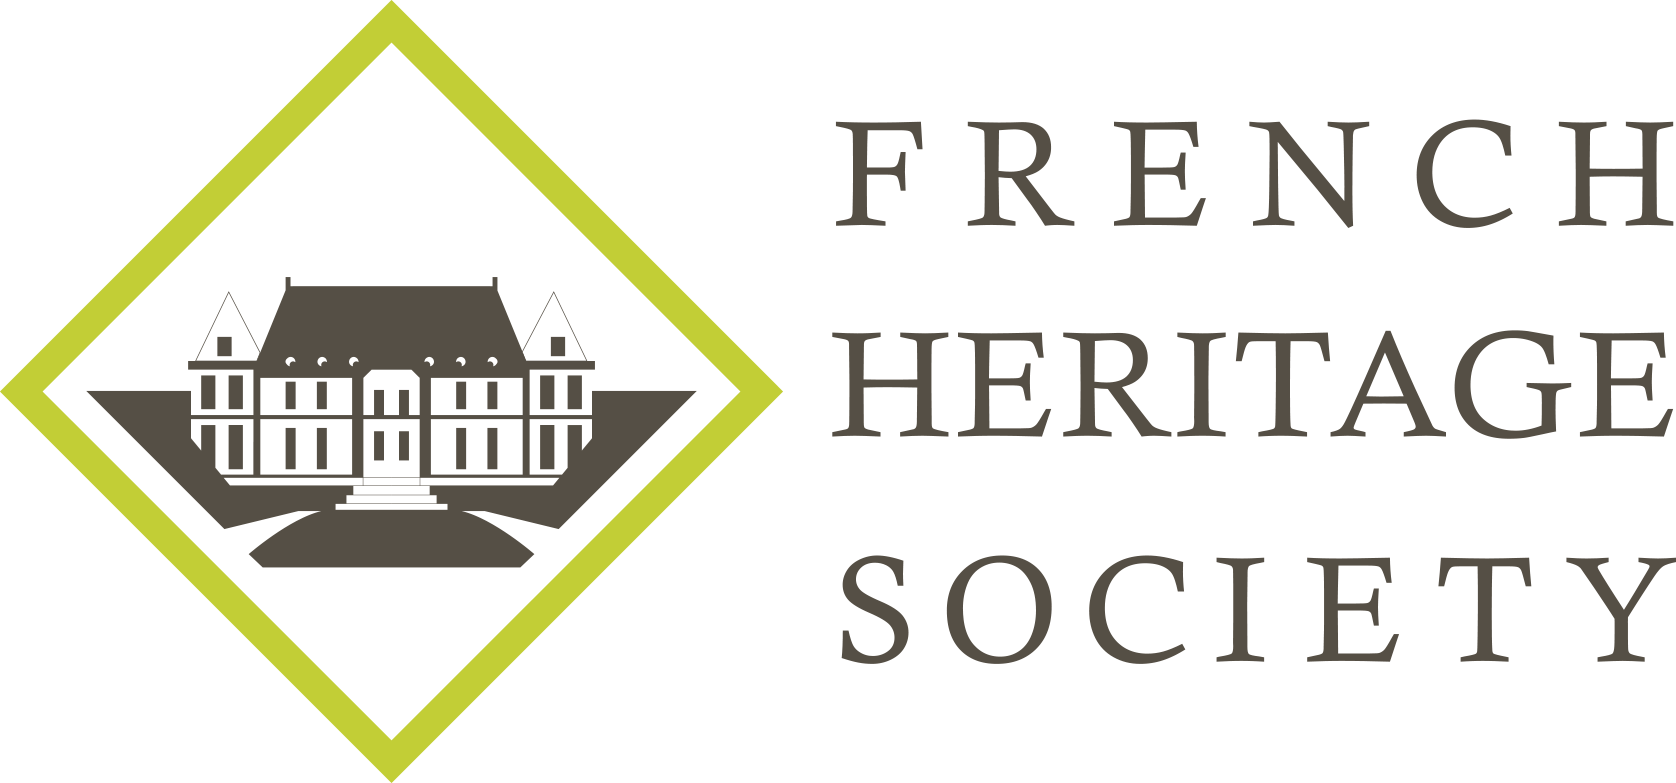 French Heritage Society